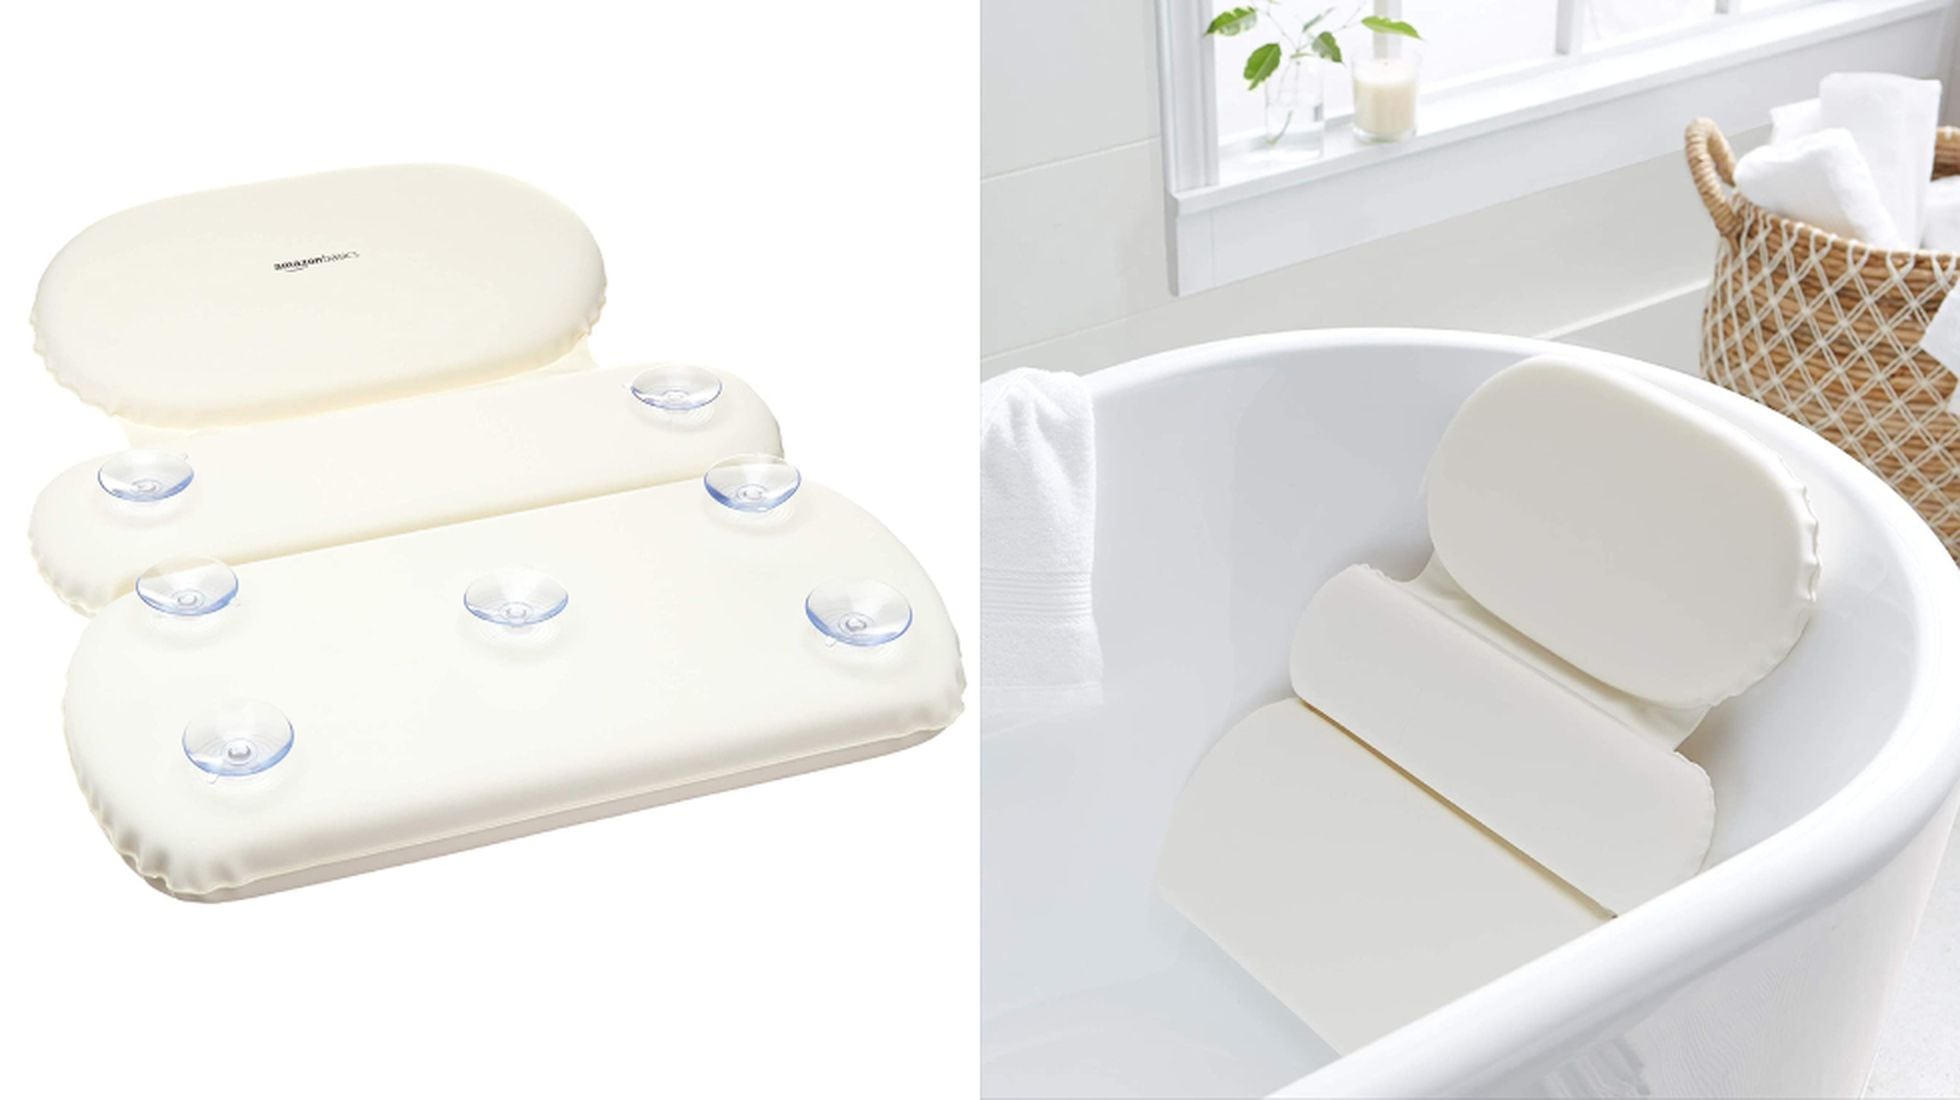  SelectSoma Almohadas de baño para soporte de cuello y espalda  de bañera - Almohada de baño para bañera - Almohada para bañera - Almohada  de spa para bañera y bañera de